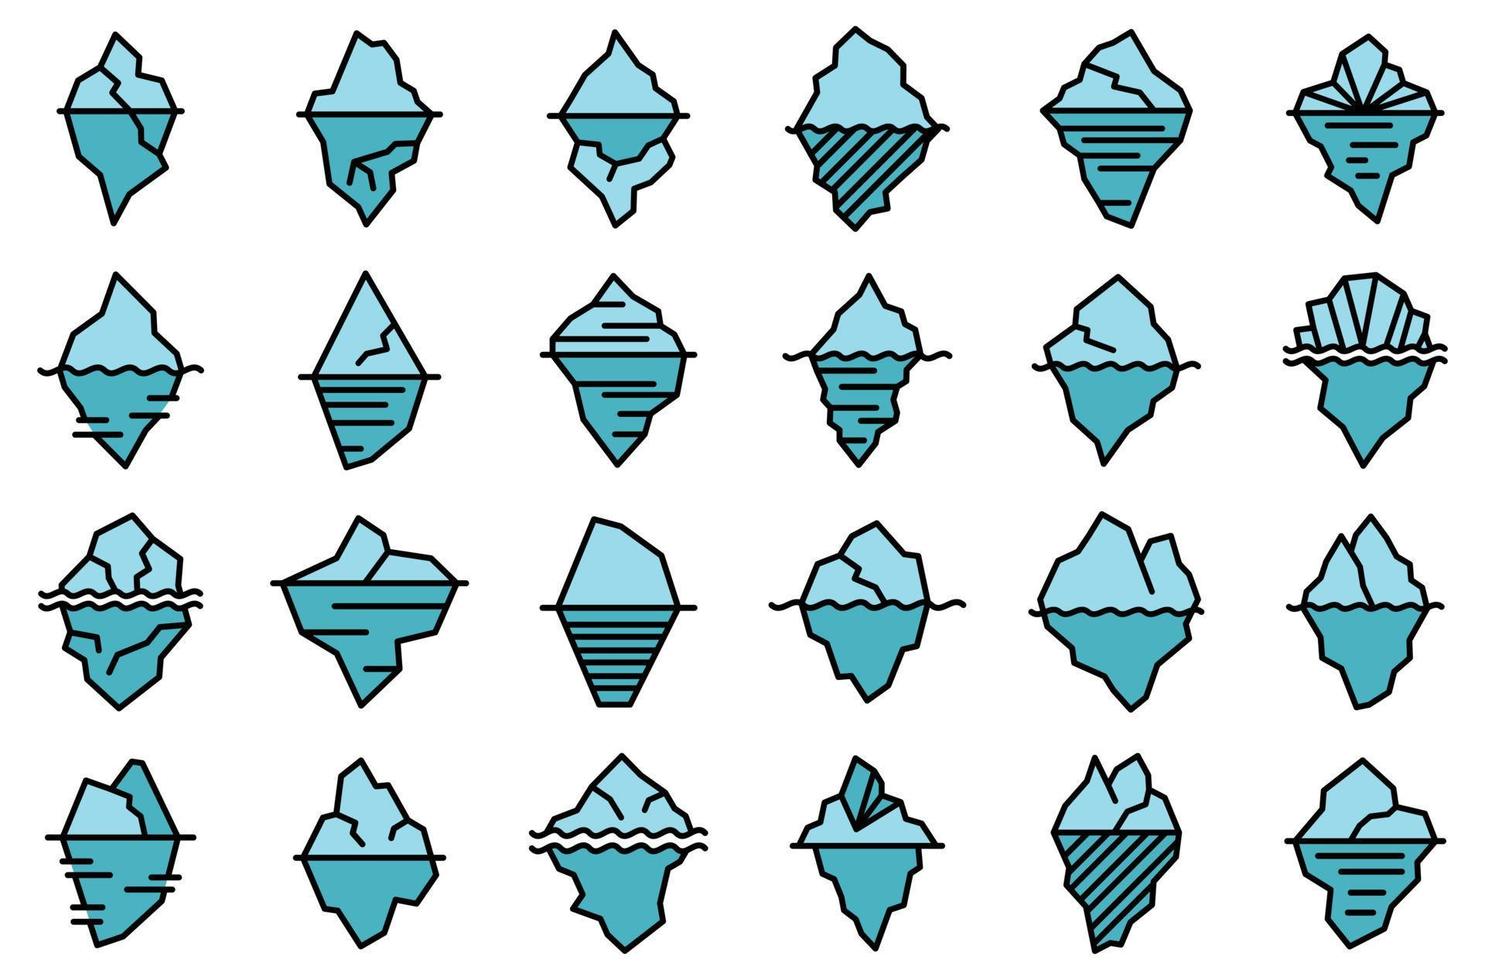 Iceberg icons set vector flat